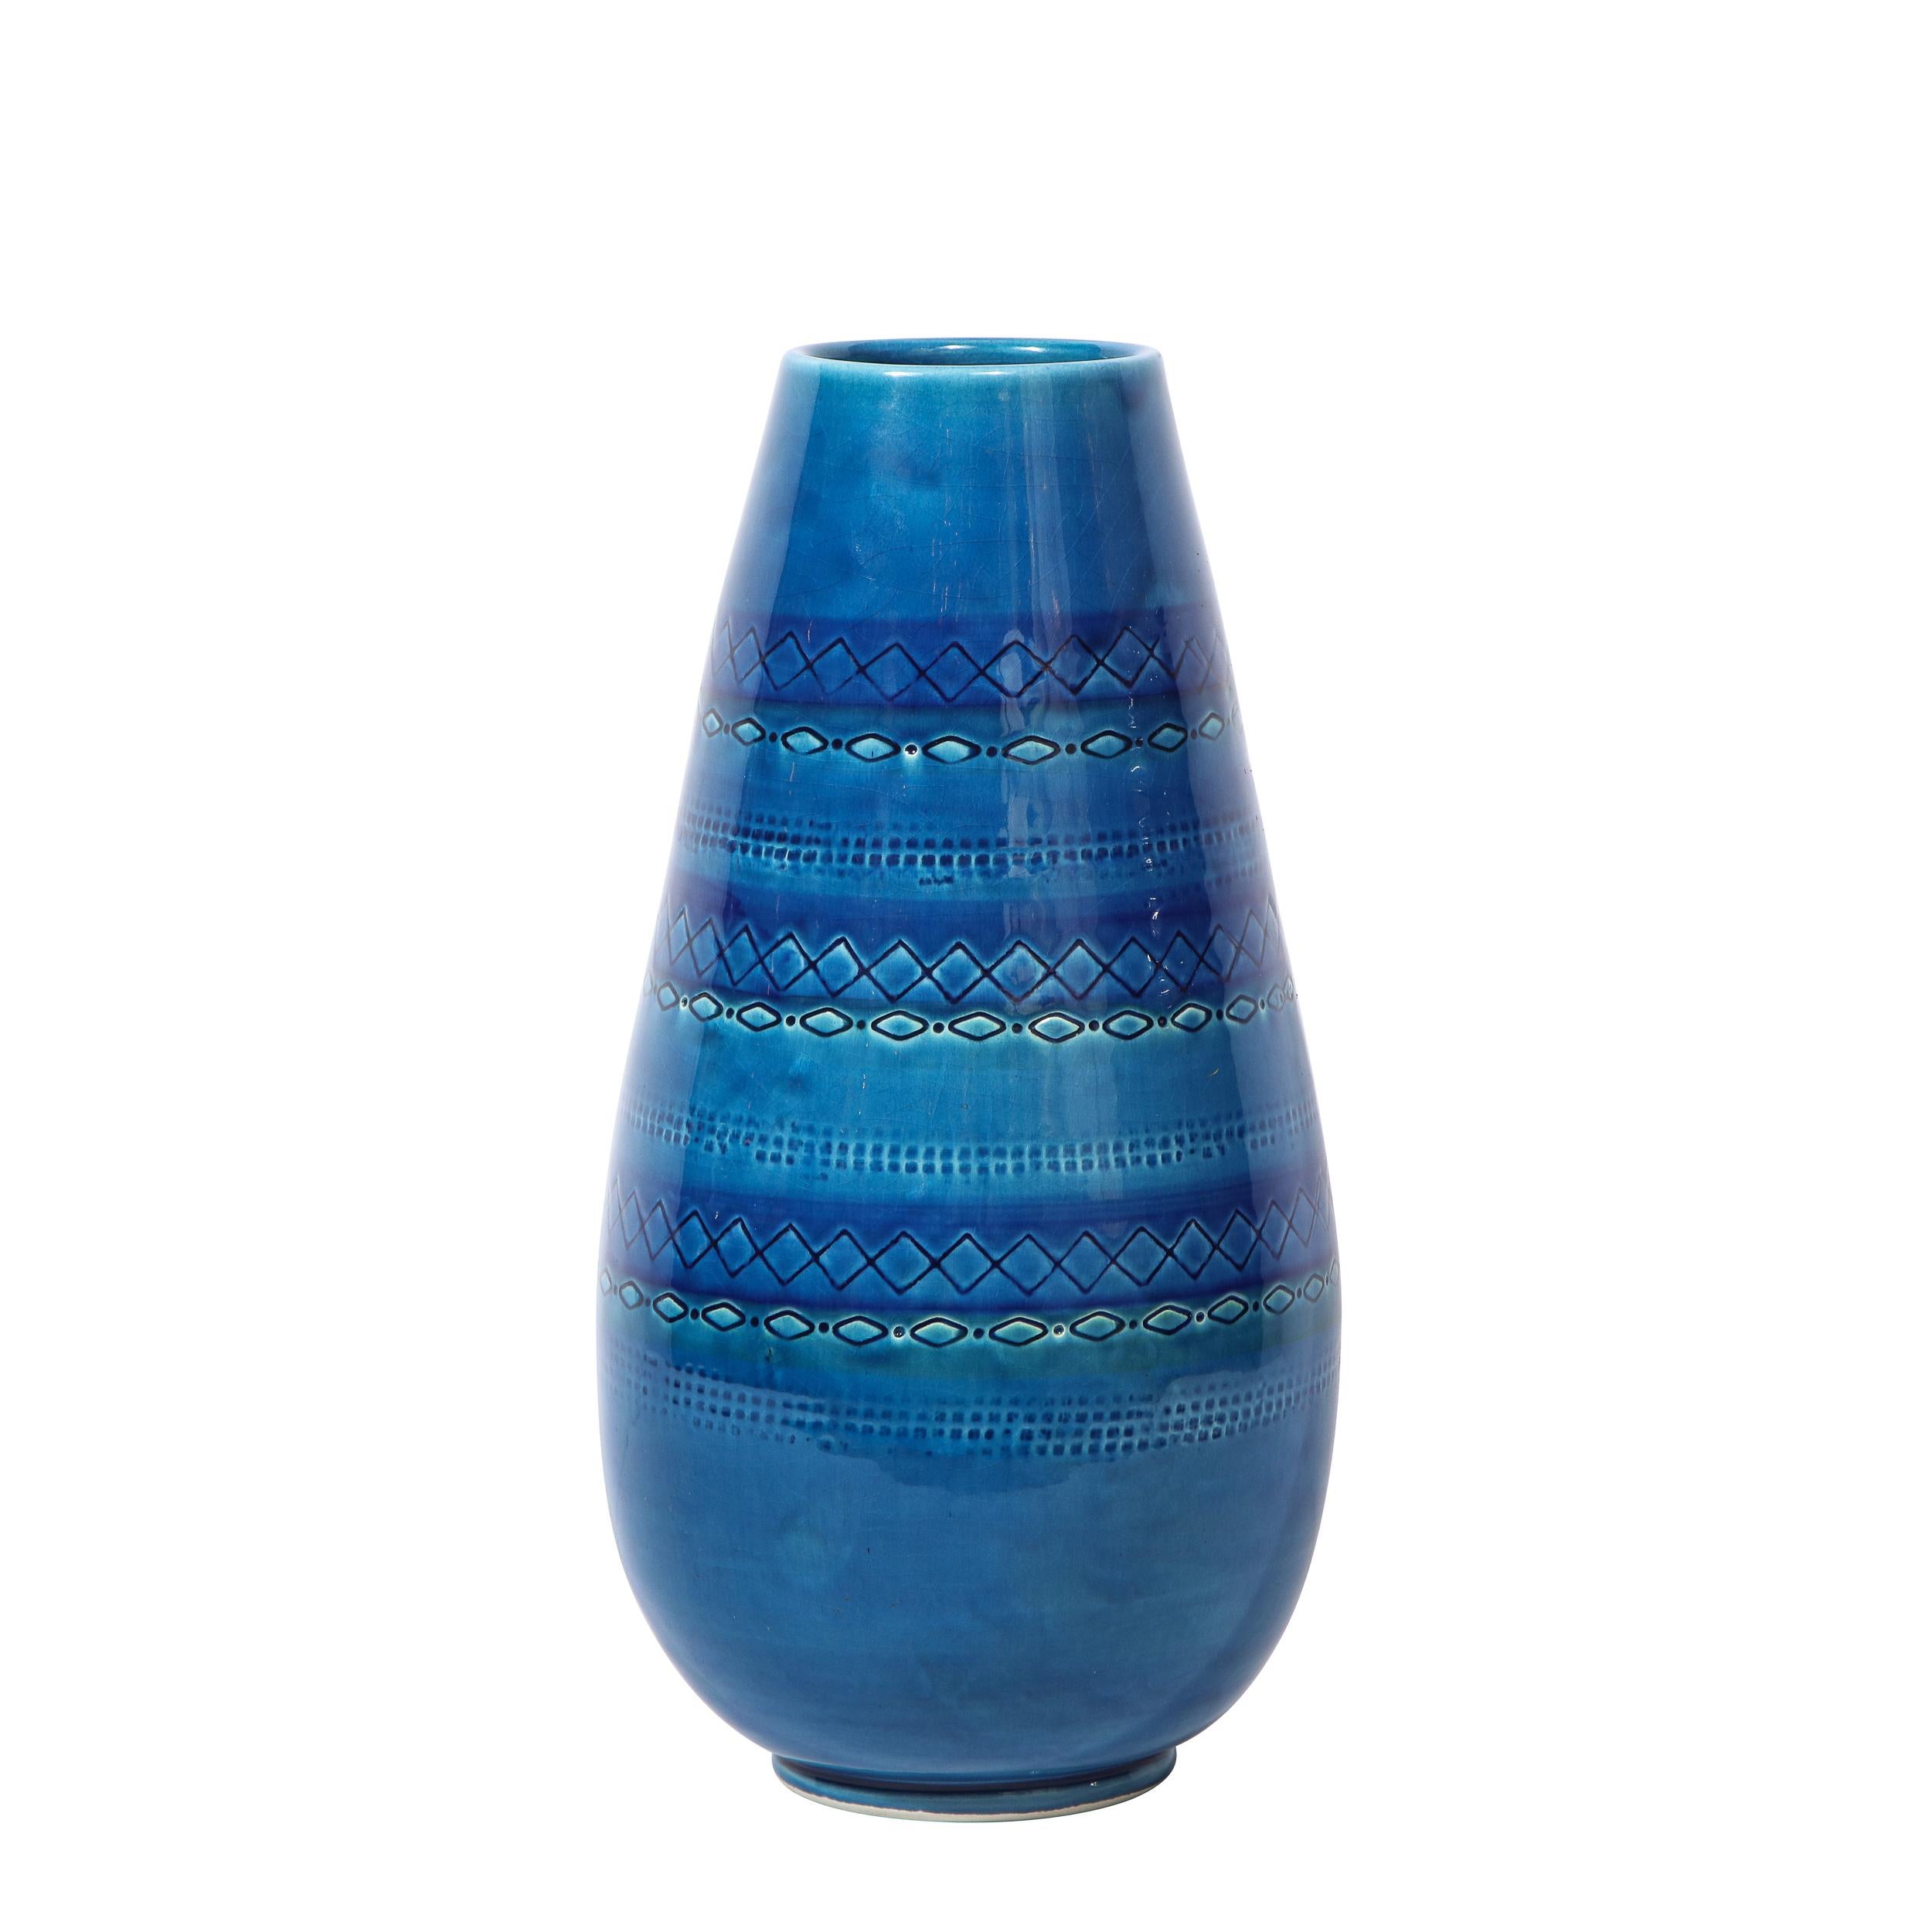 Italian Mid-Century Modern Conical Azure Blue Ceramic Vase with Geometric Detailing